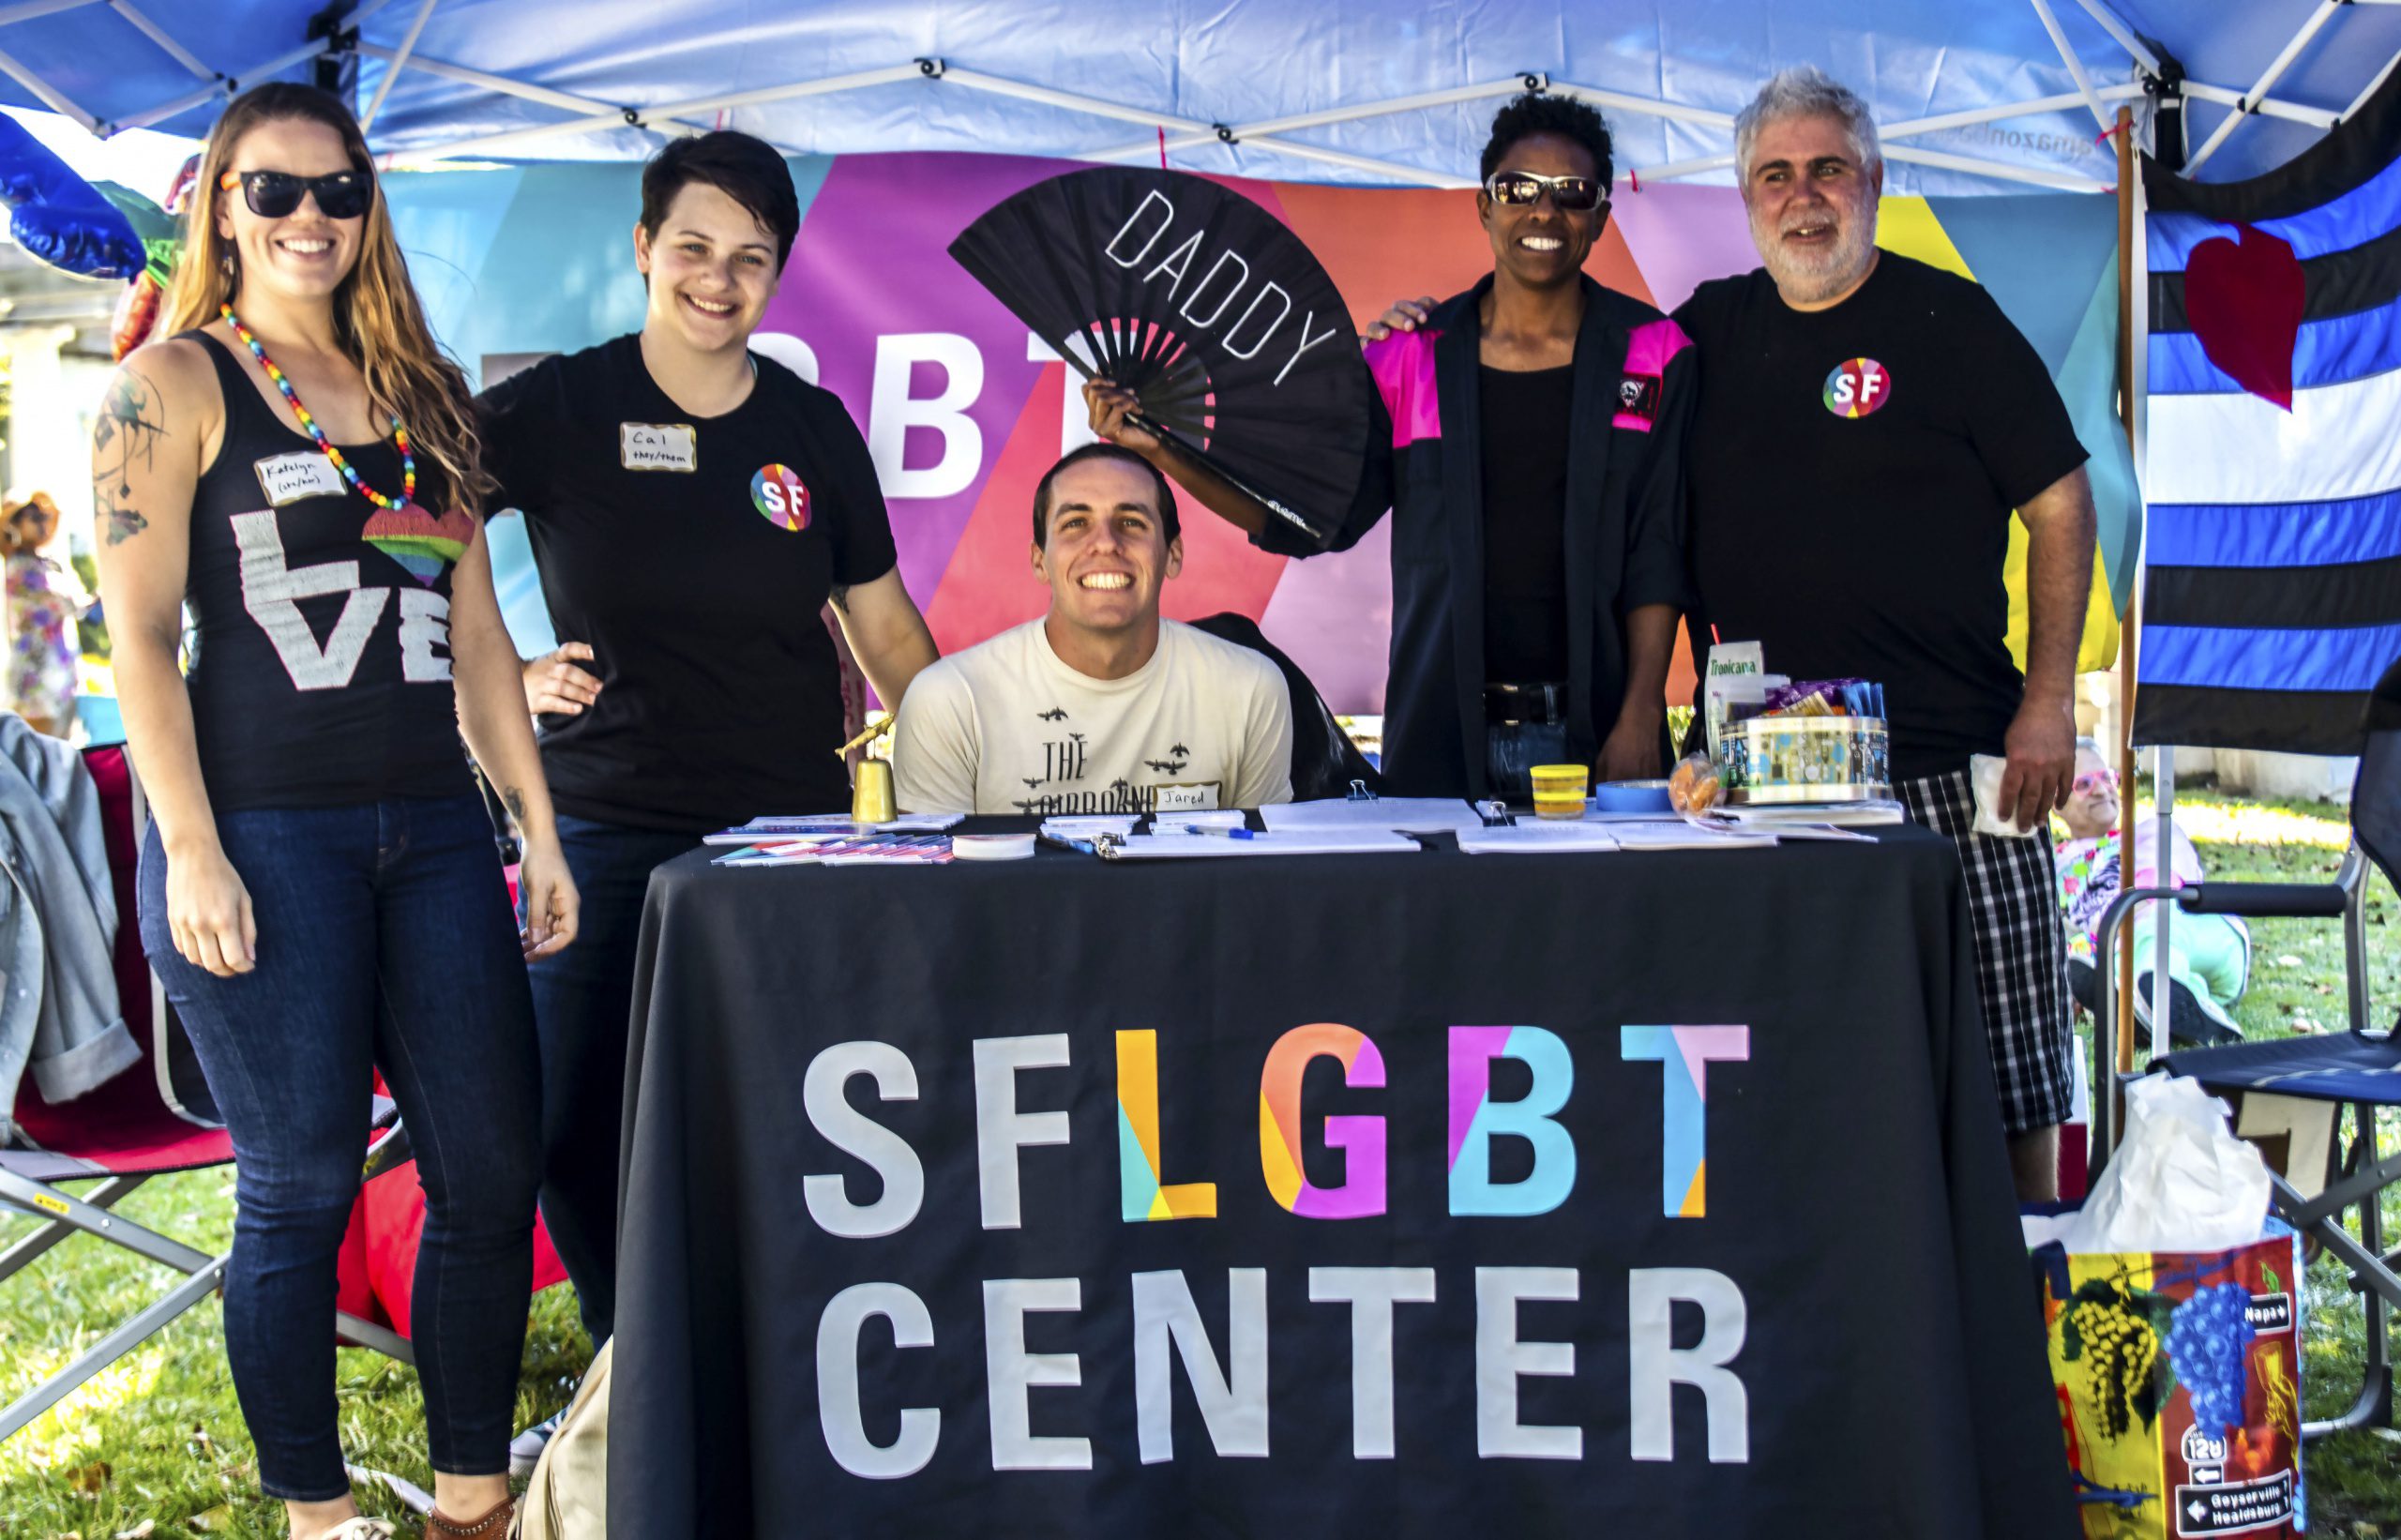 SF LGBT Center at Oakland Pride